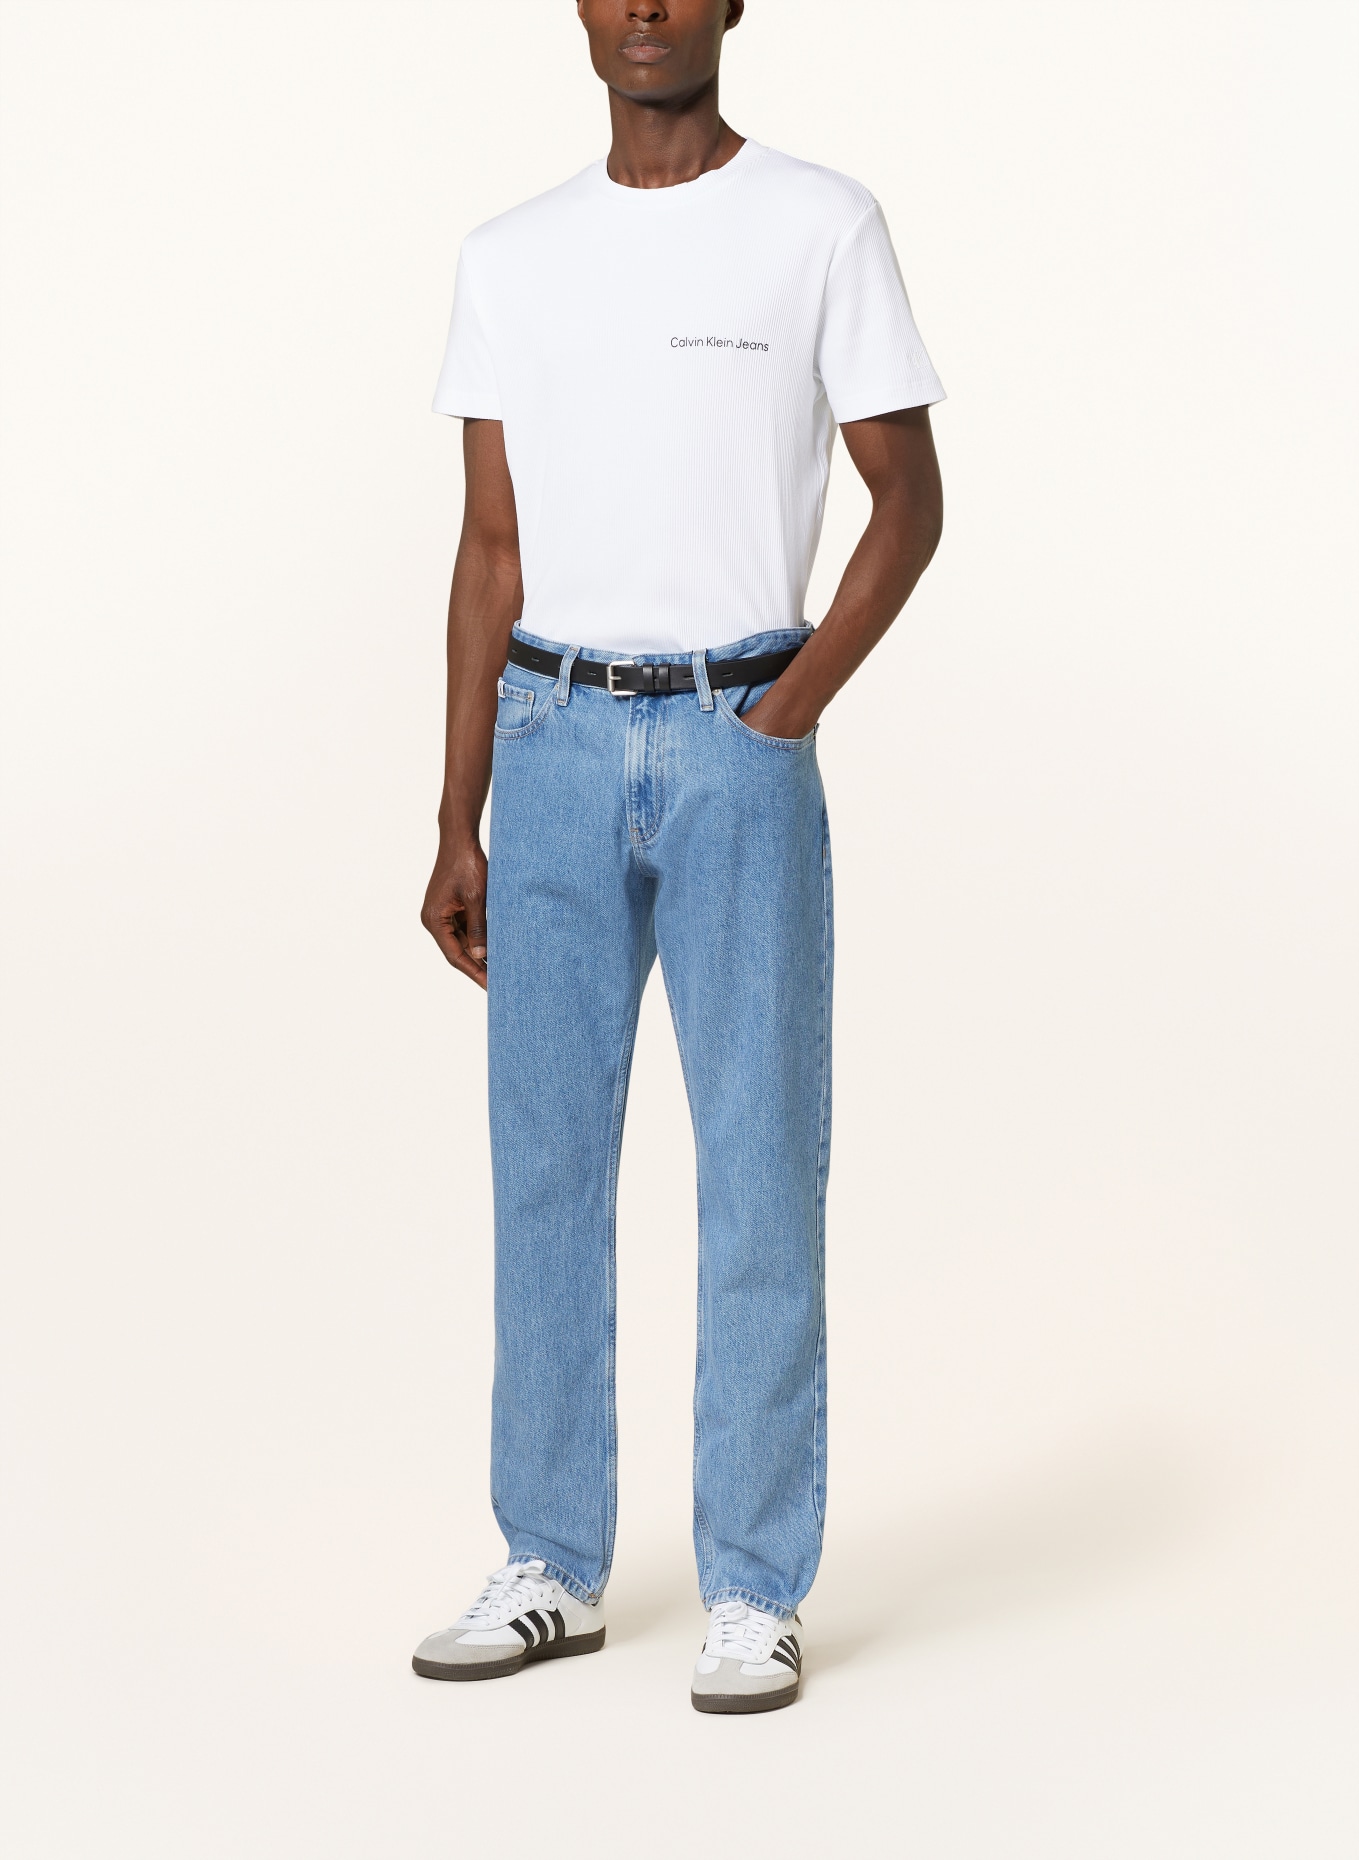 Calvin Klein Jeans T-Shirt in weiss